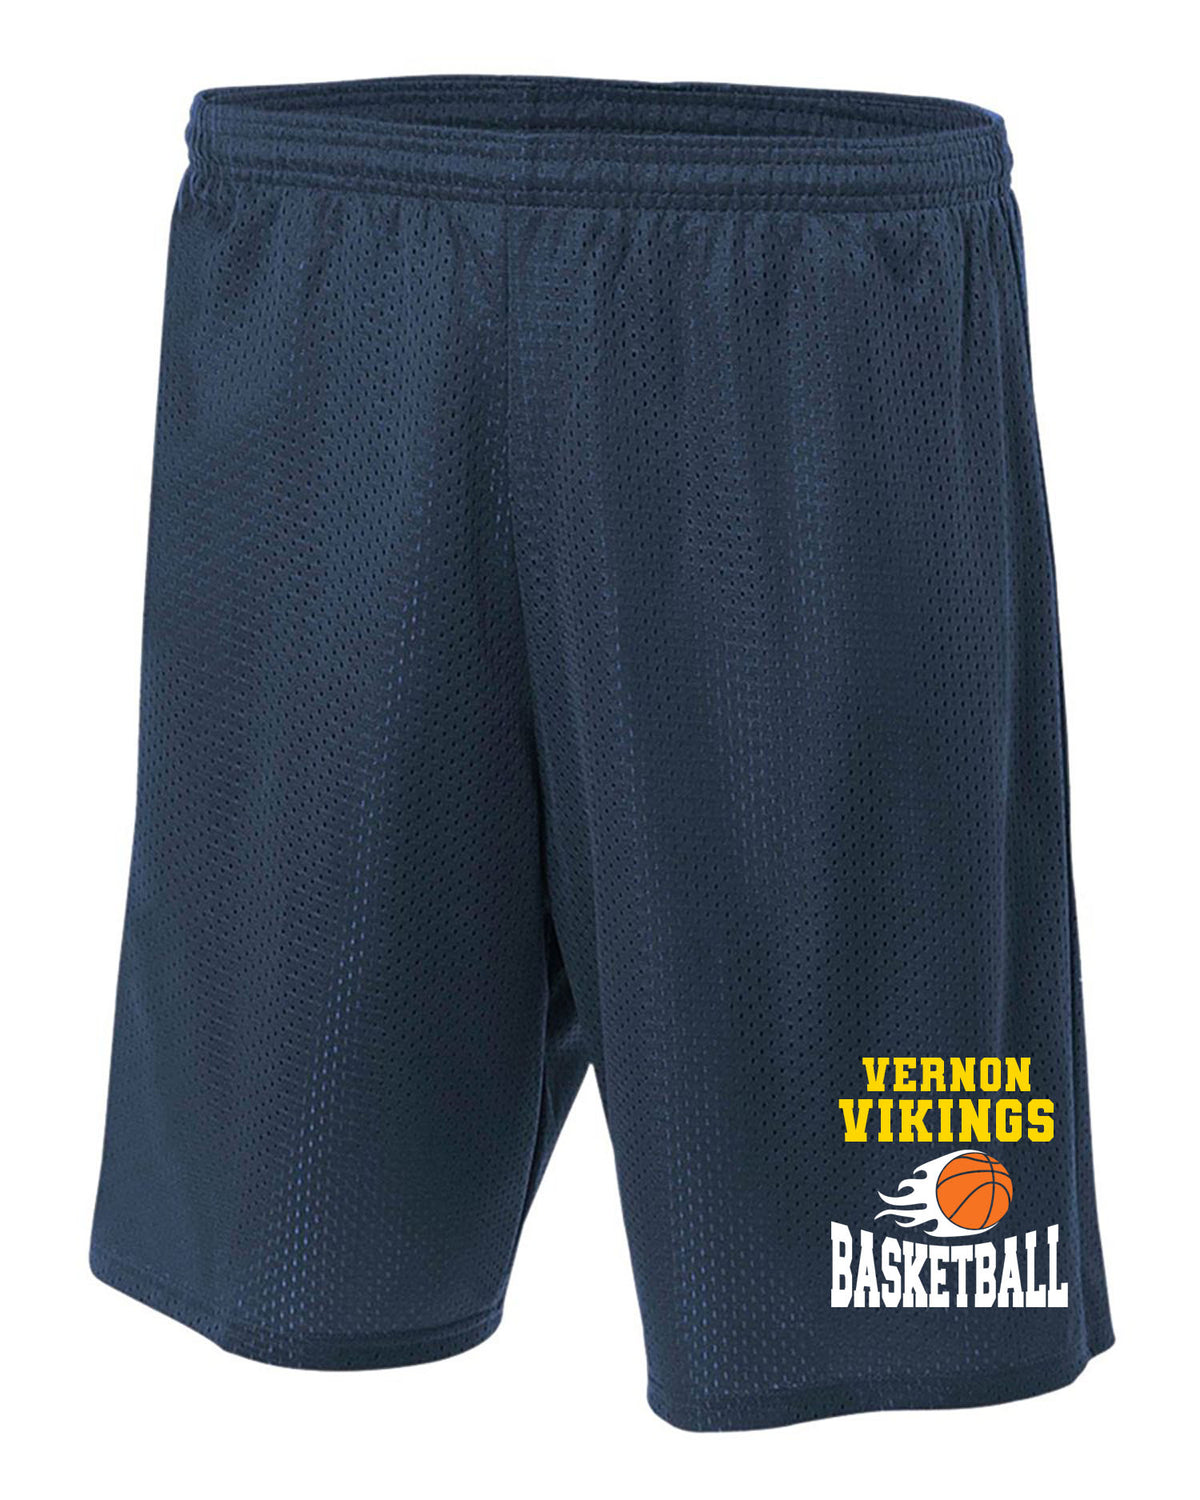 Vikings Basketball Design 4 Mesh Shorts